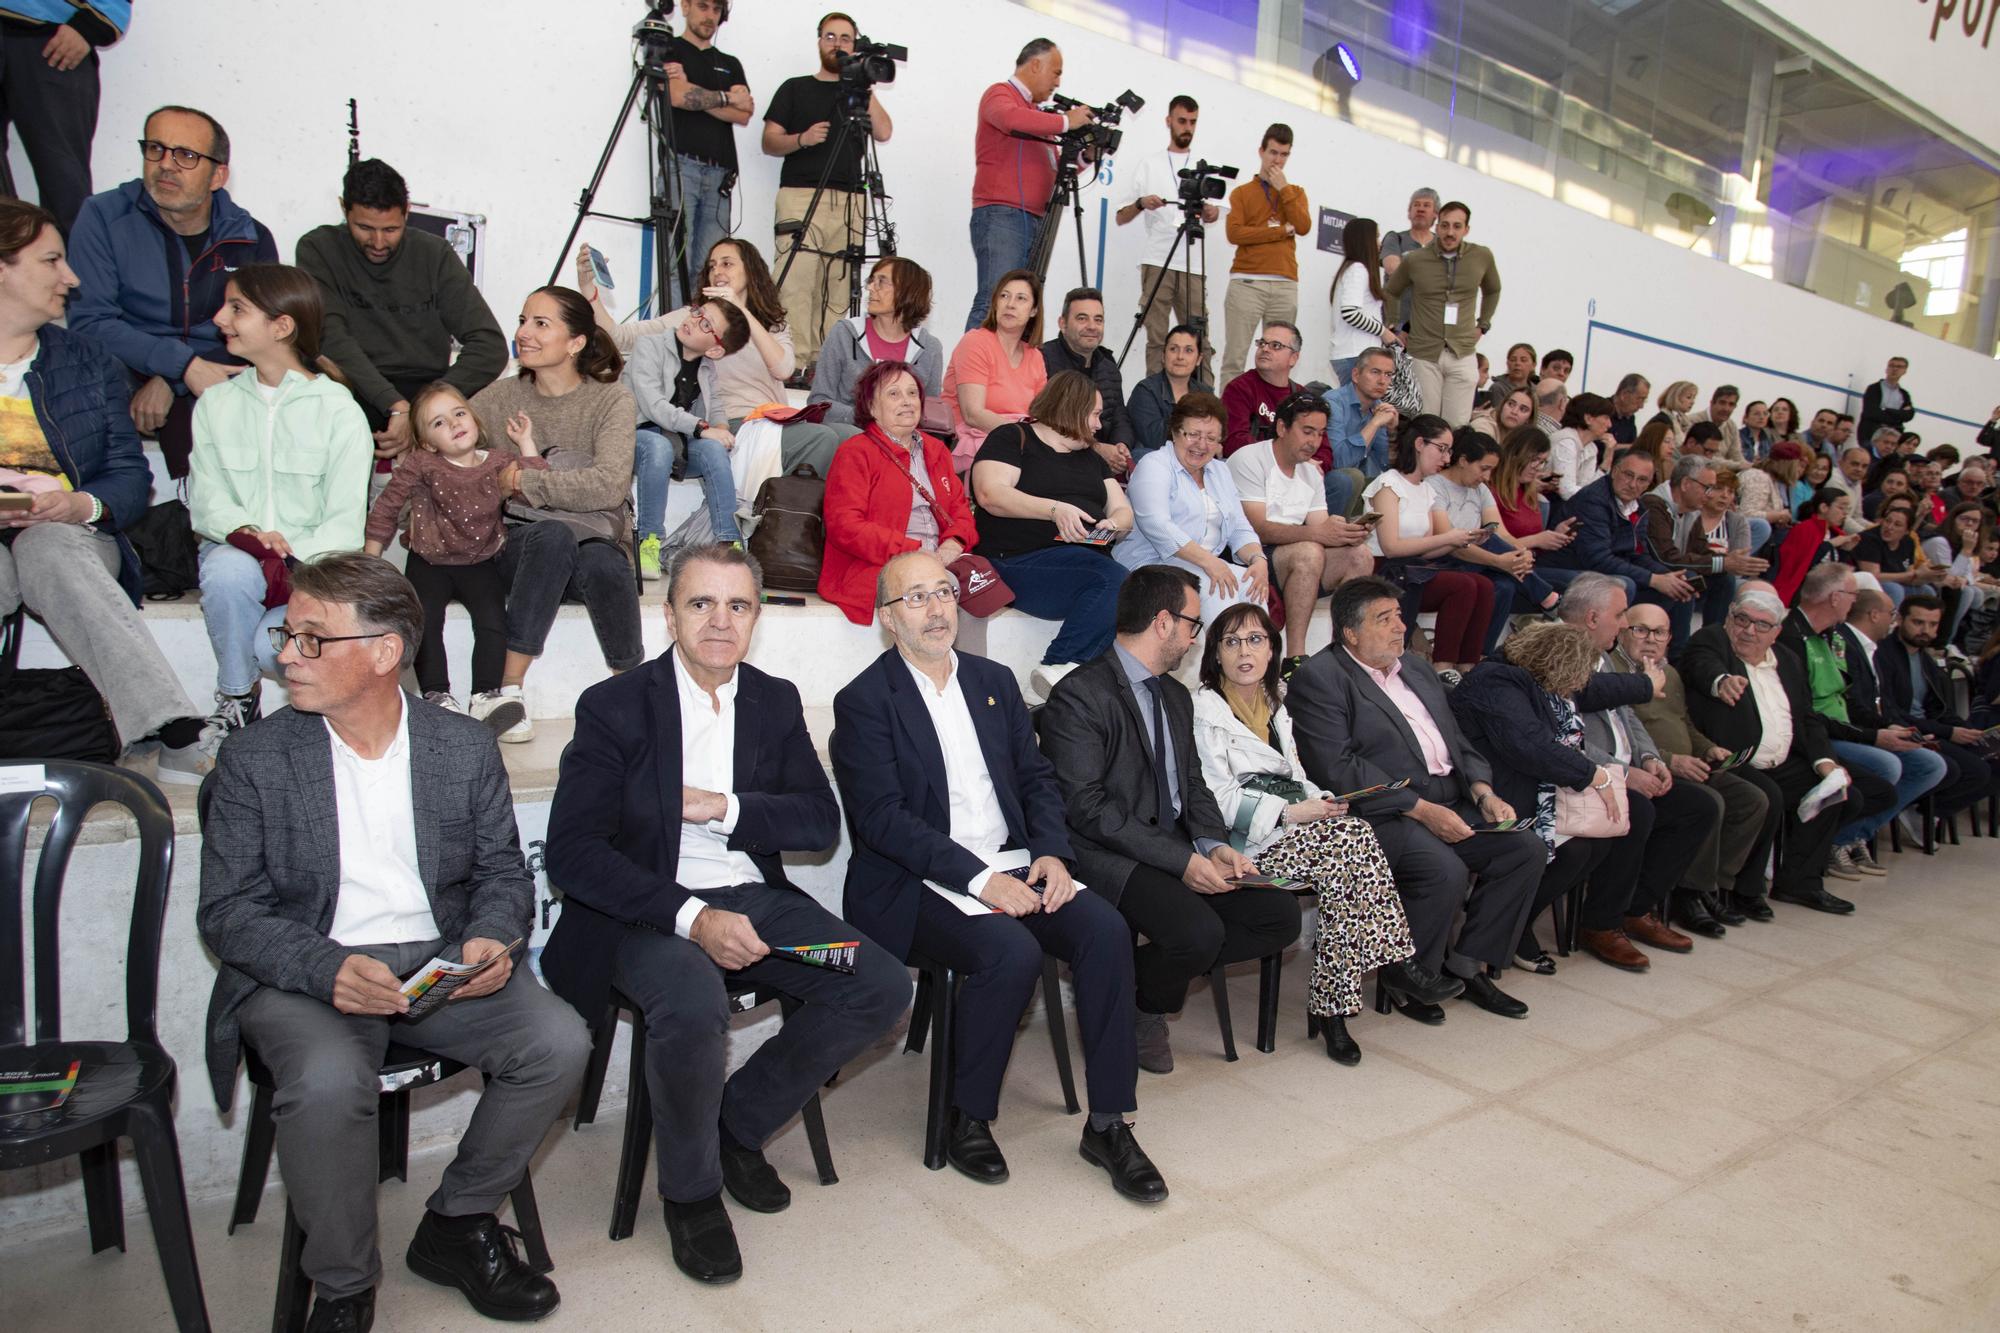 Las mejores imágenes de la gala inaugural del Mundial de Pilota de Alzira